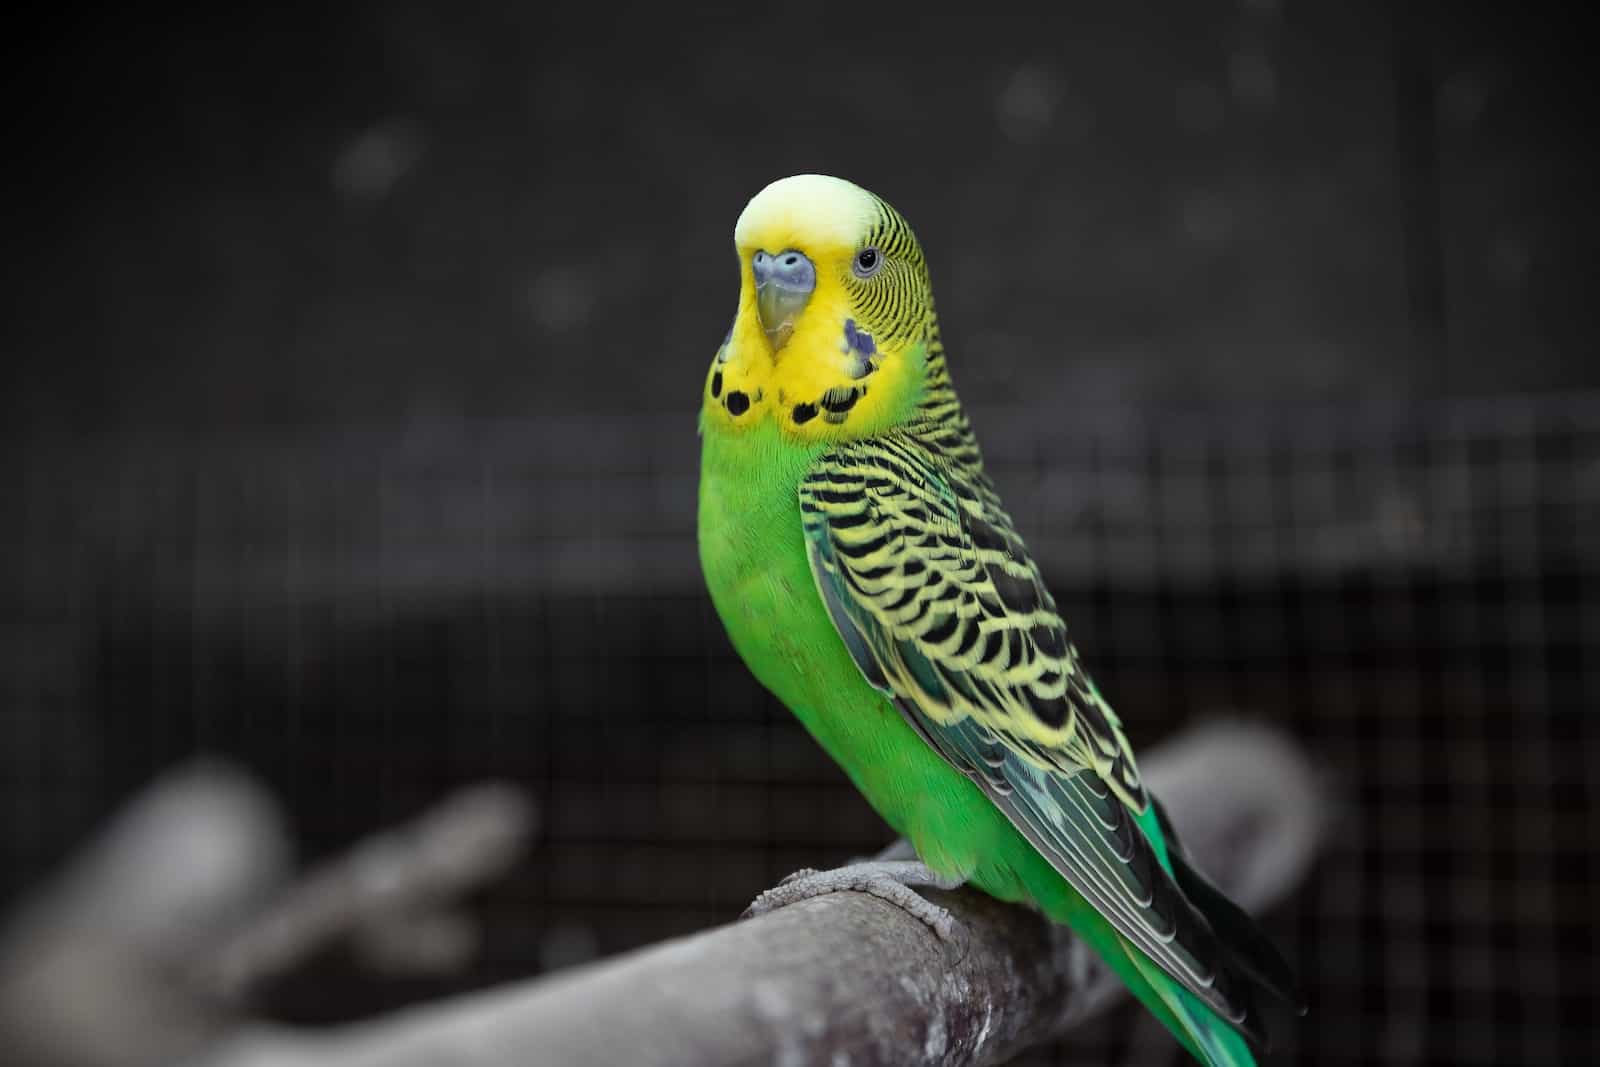 A parakeet